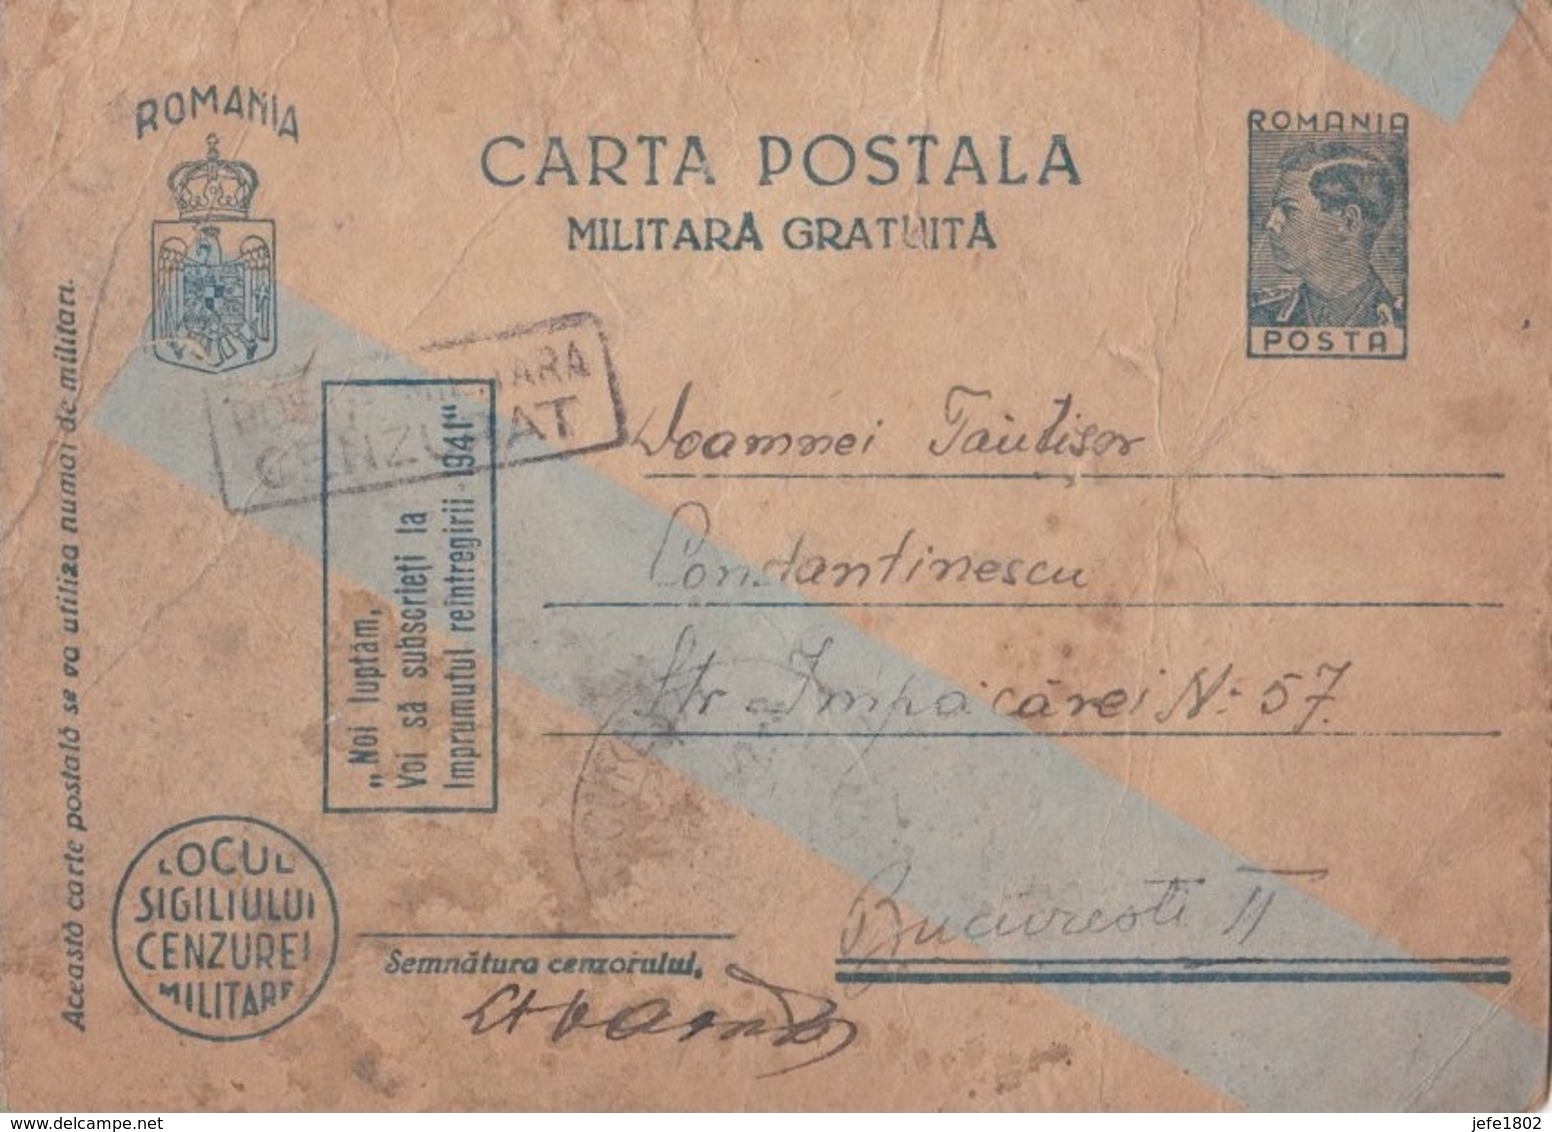 WO II - Carta Postala - Militara Gratuita - Franquicia